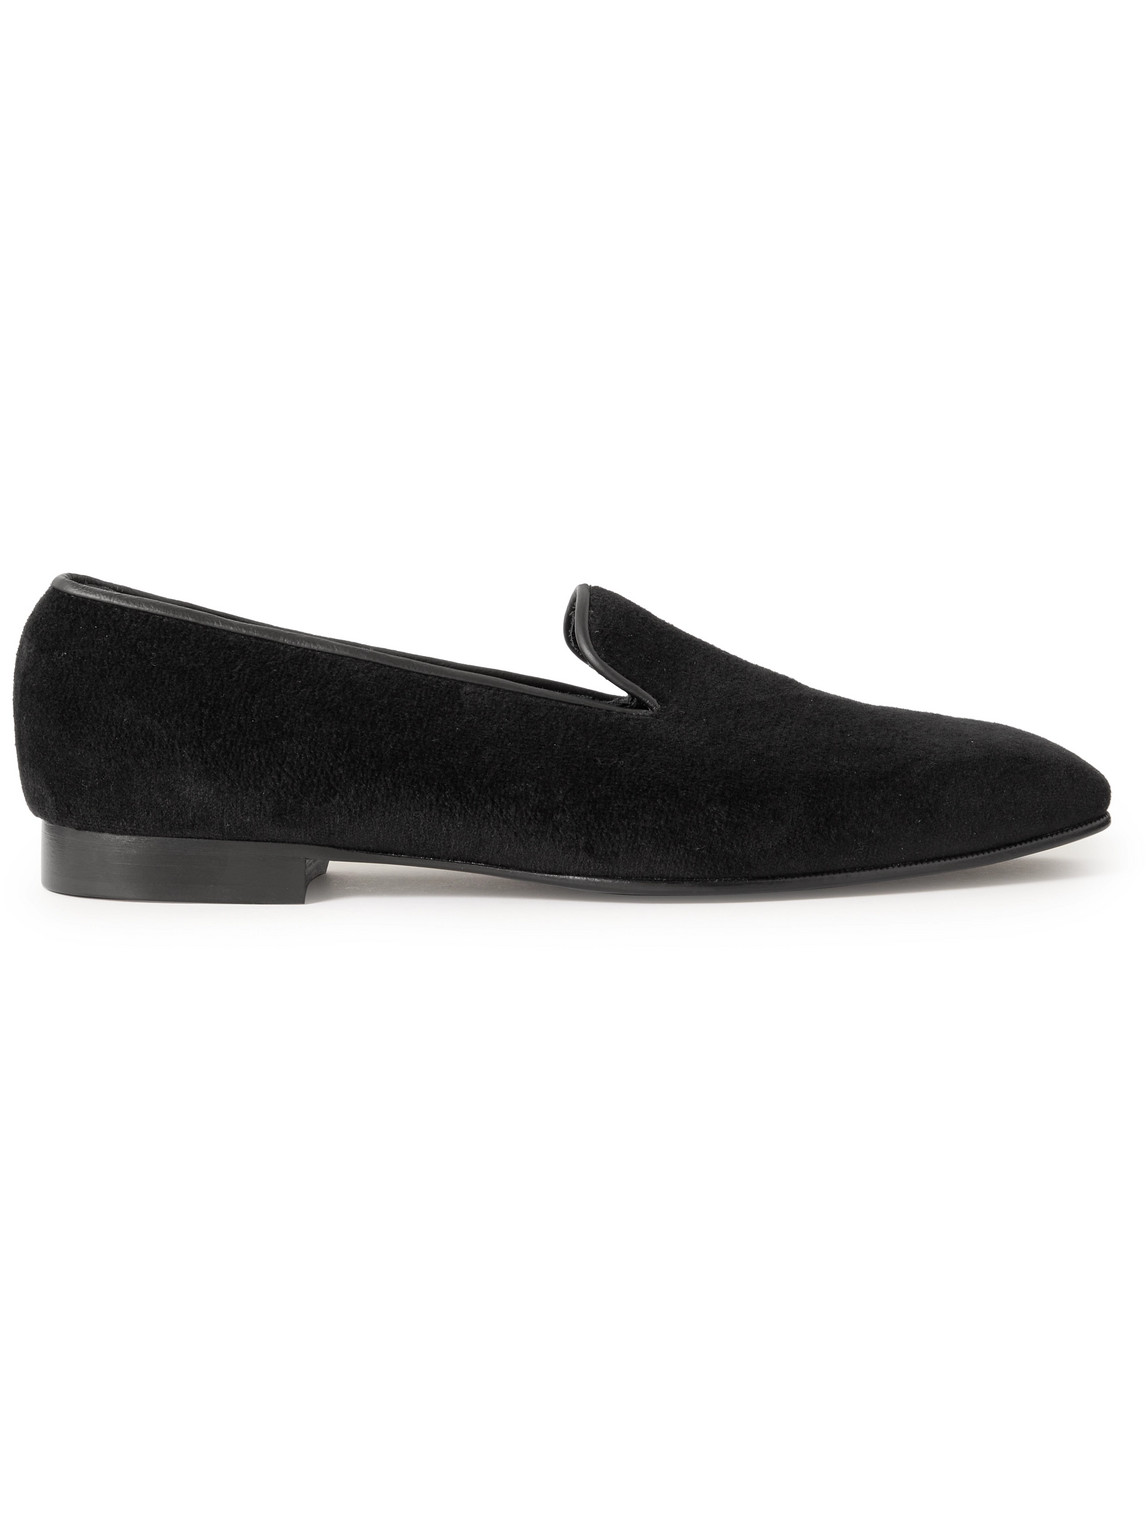 Windsor Leather-Trimmed Cashmere Loafers